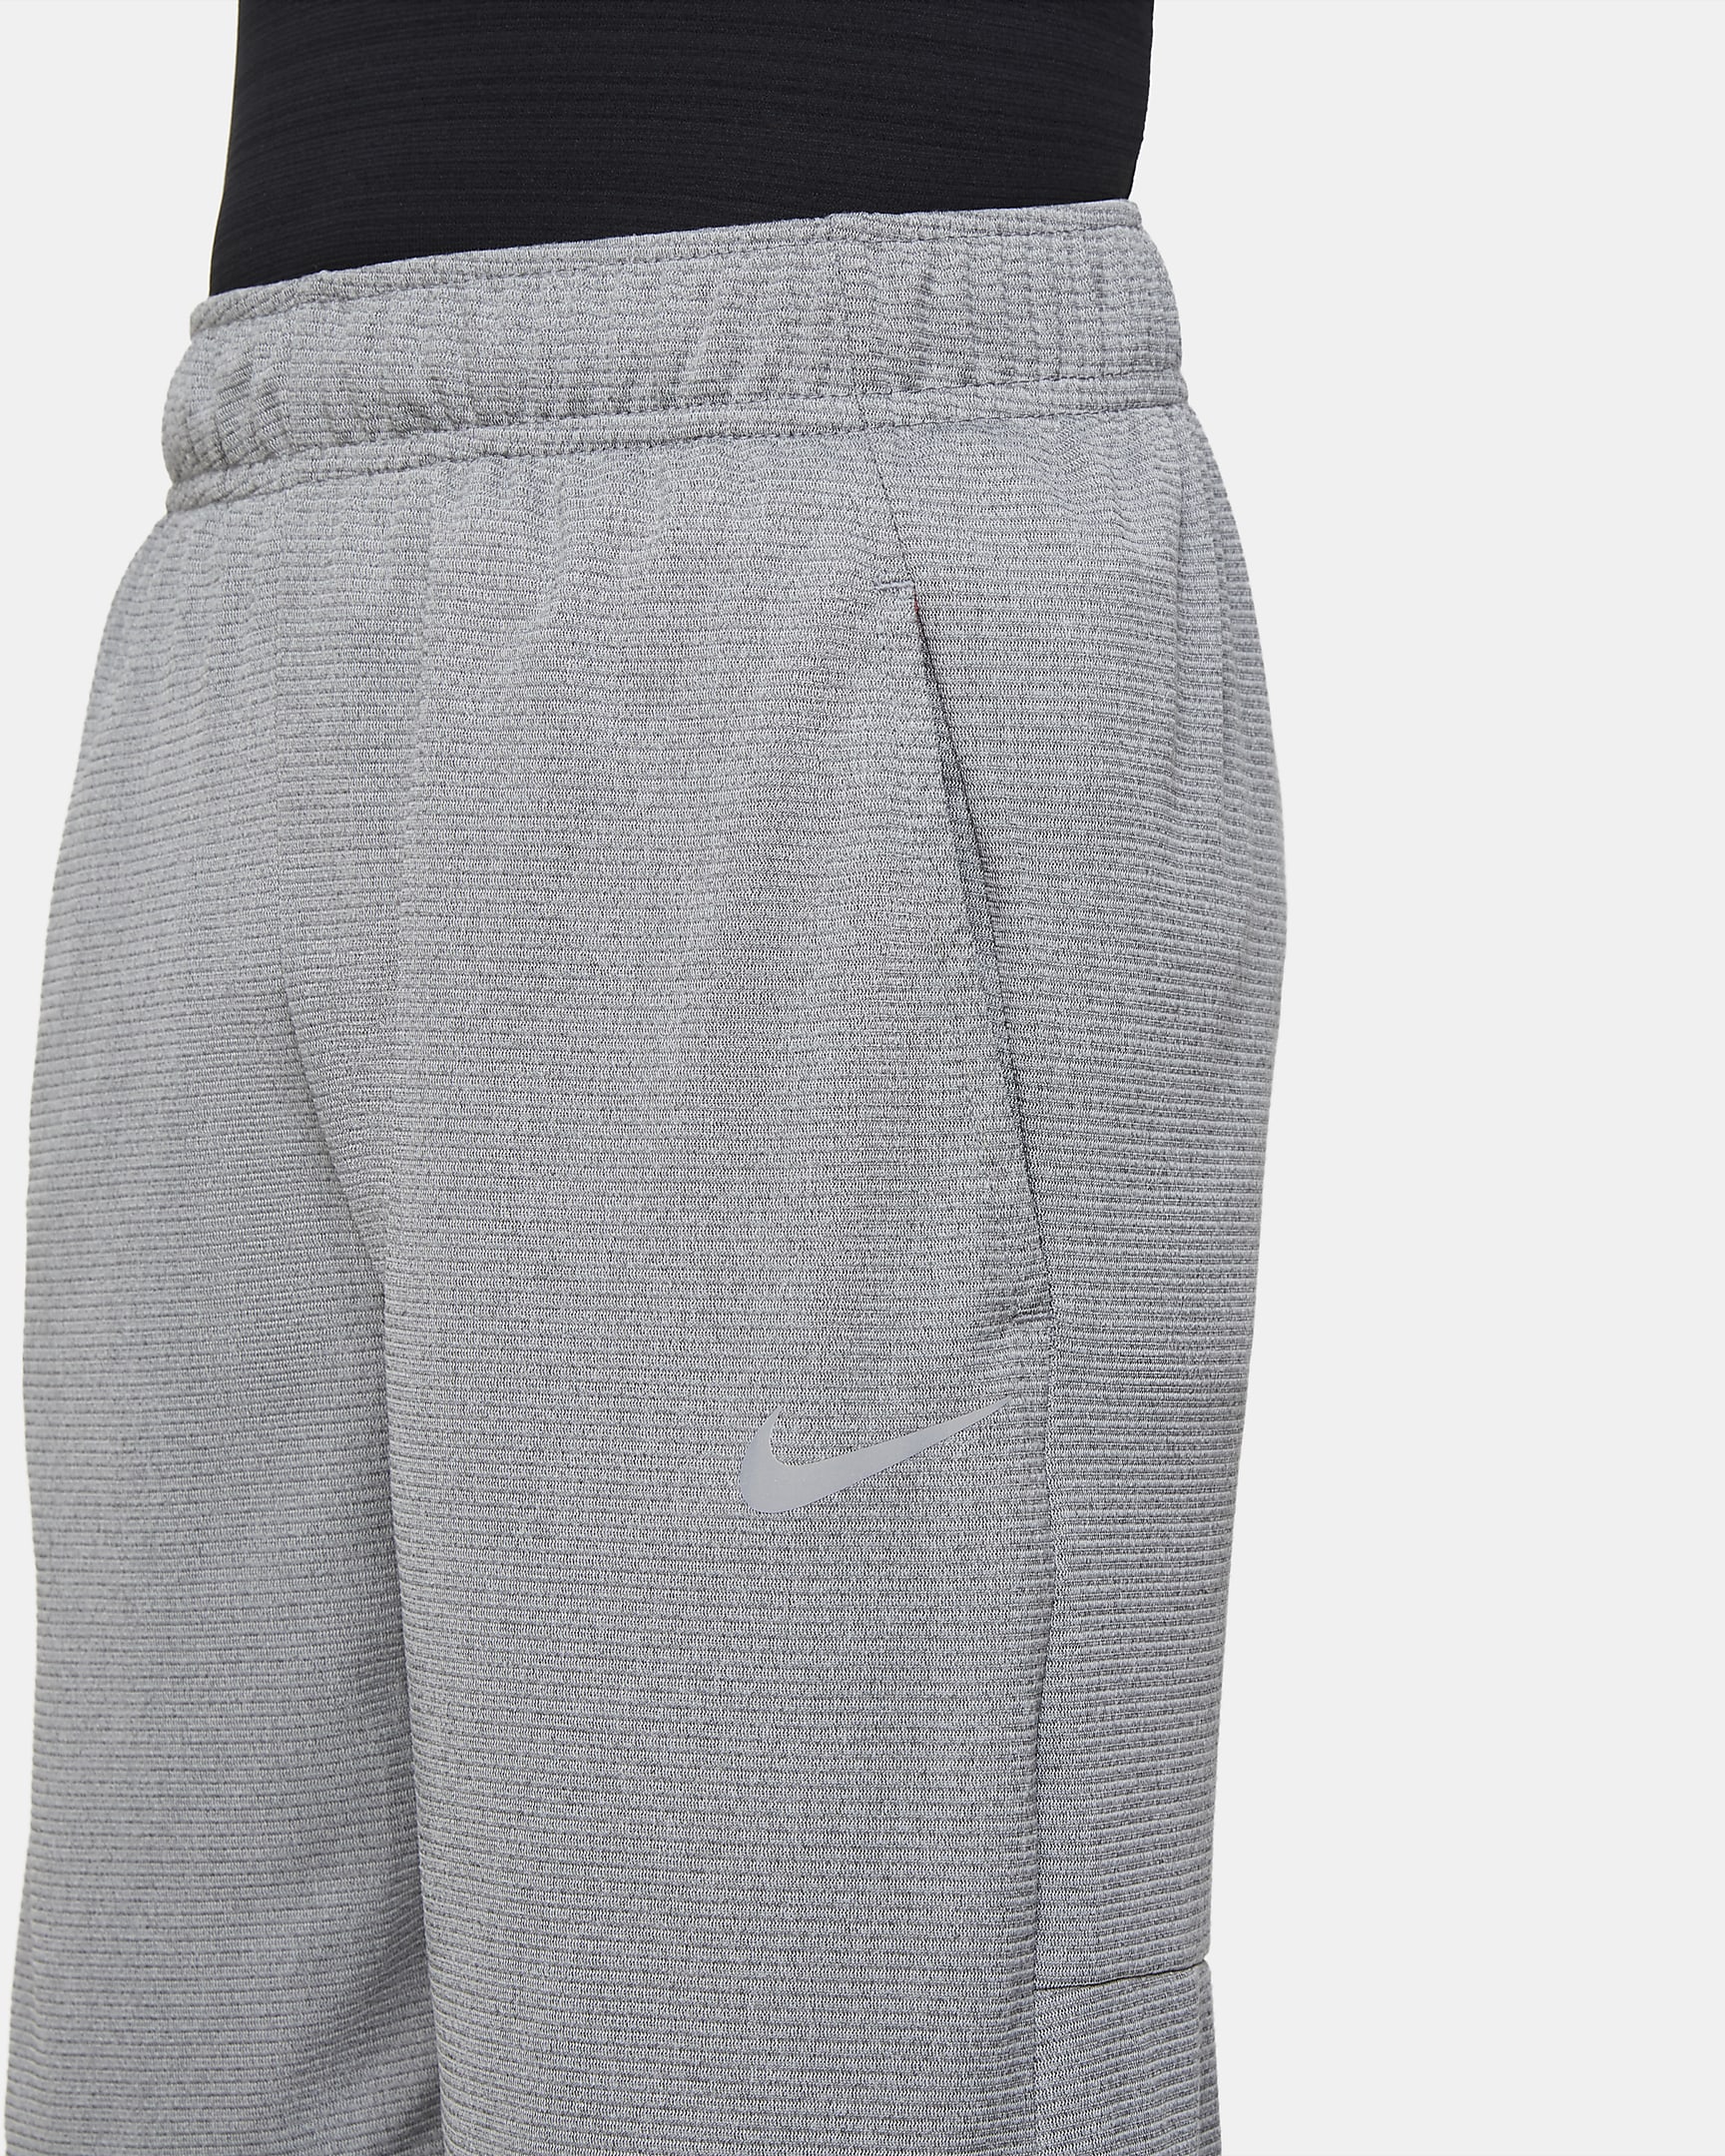 Nike Poly+ Big Kids' (Boys') Shorts - Carbon Heather